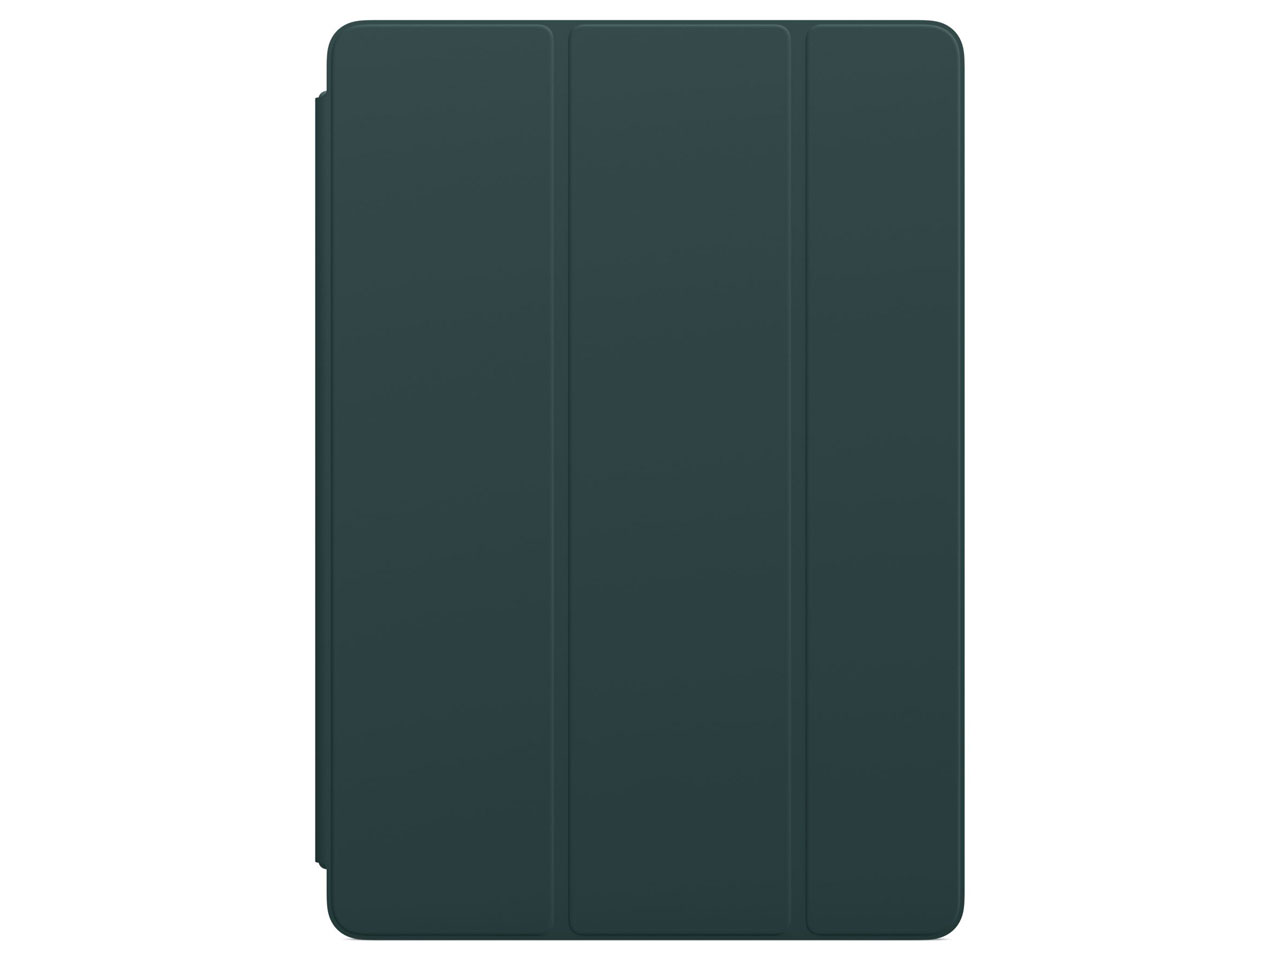 iPad(第8世代)用 Smart Cover MJM73FE/A [マラードグリーン]